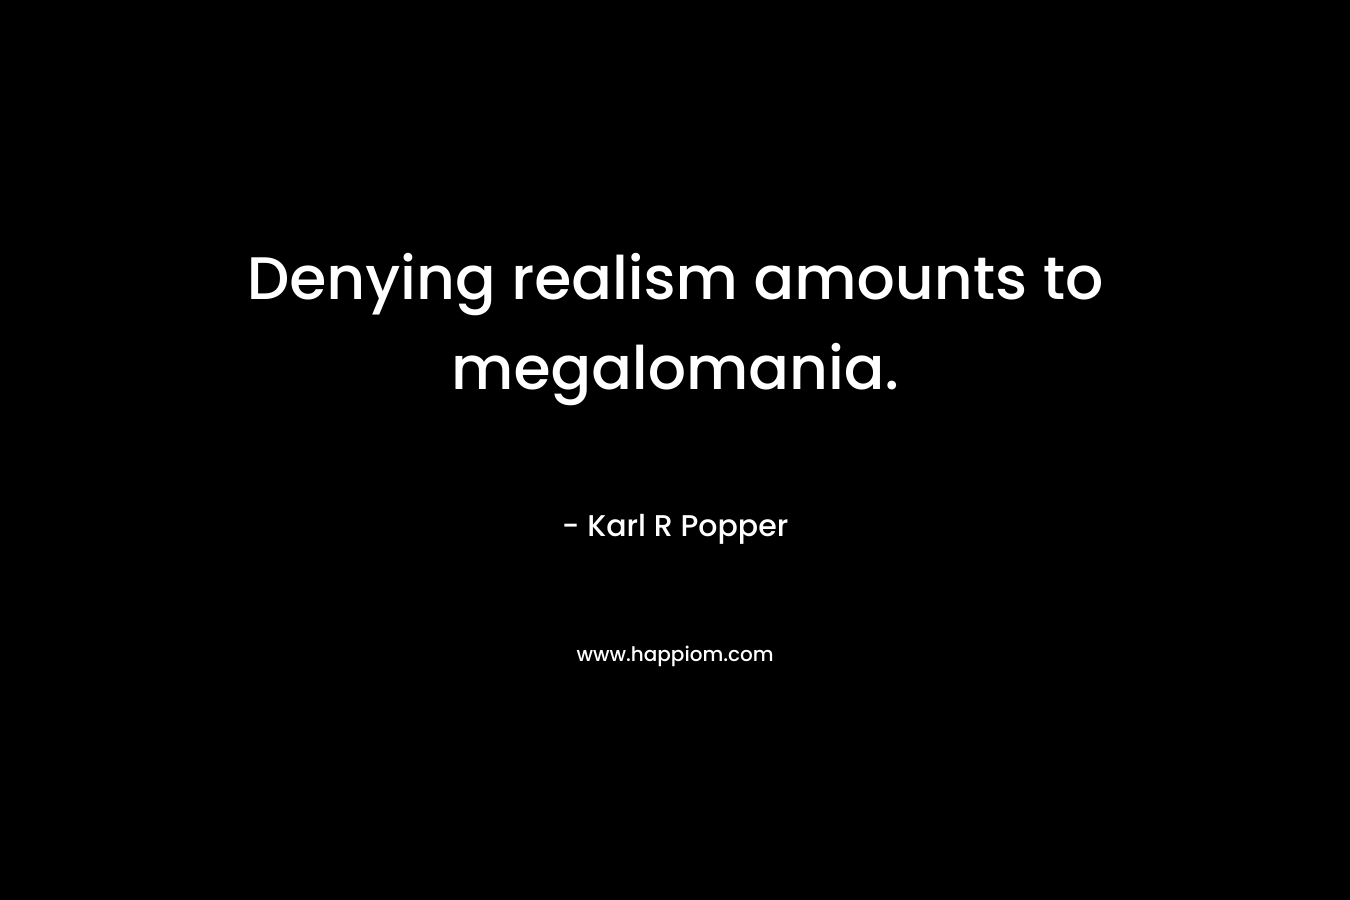 Denying realism amounts to megalomania.